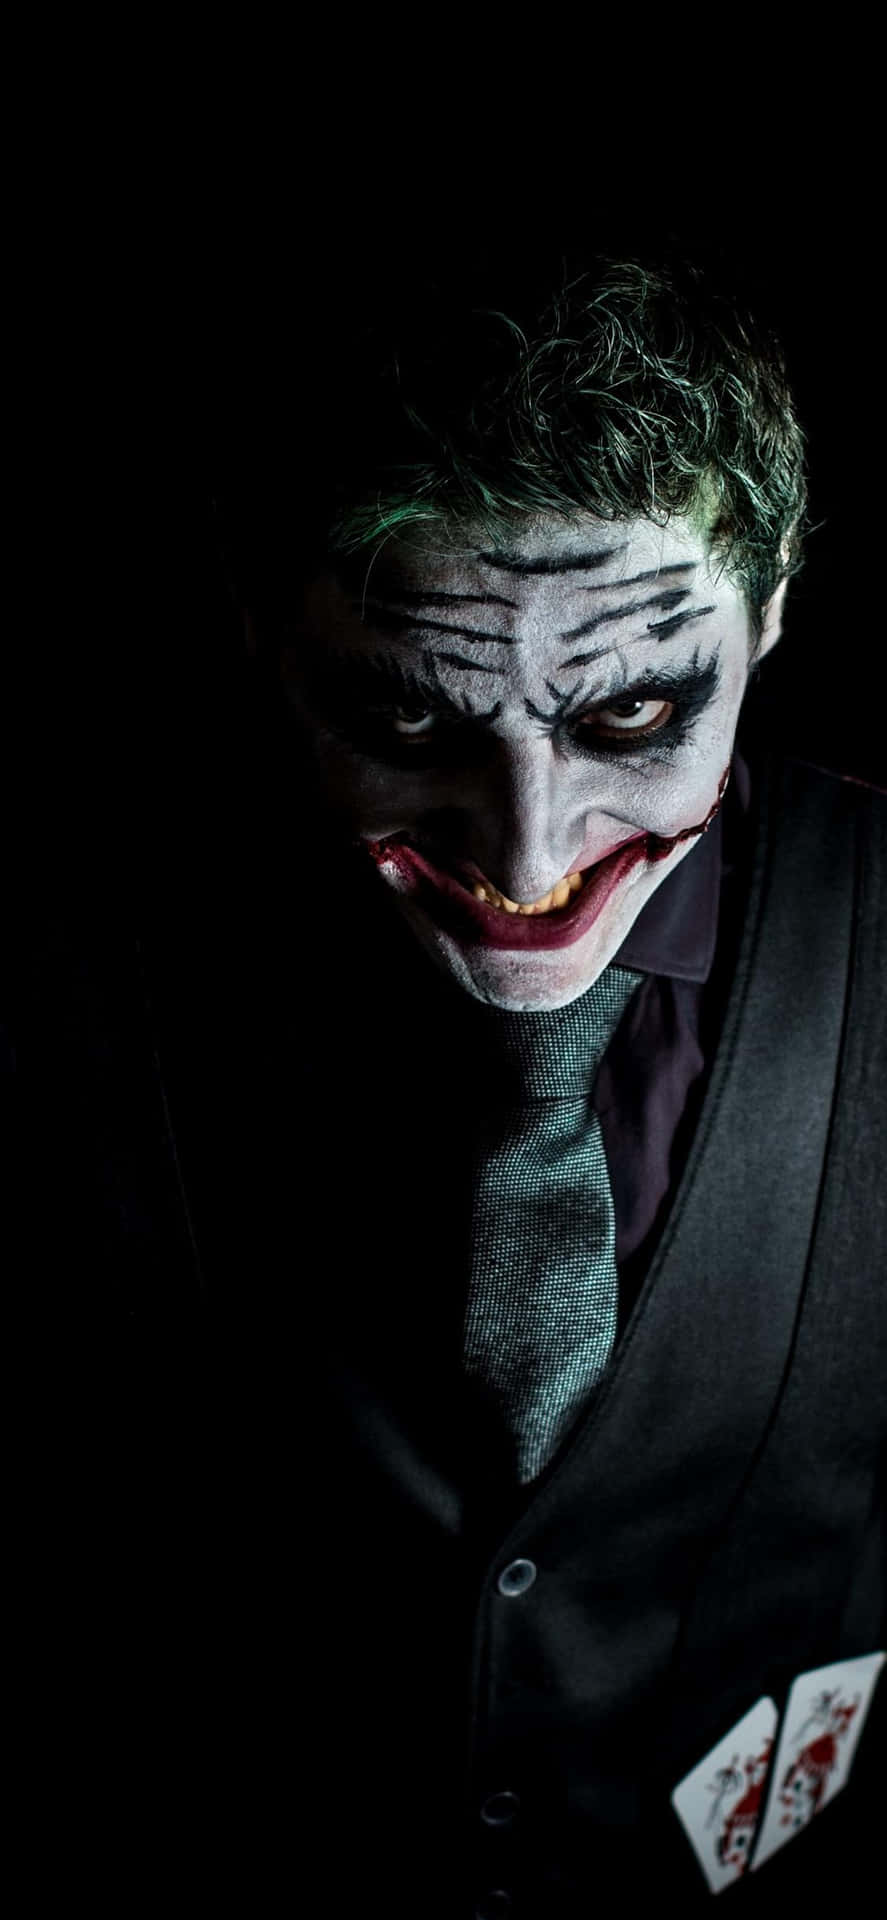 Liberatu Lado Oscuro: Imagen Intensa Del Joker Oscuro. Fondo de pantalla